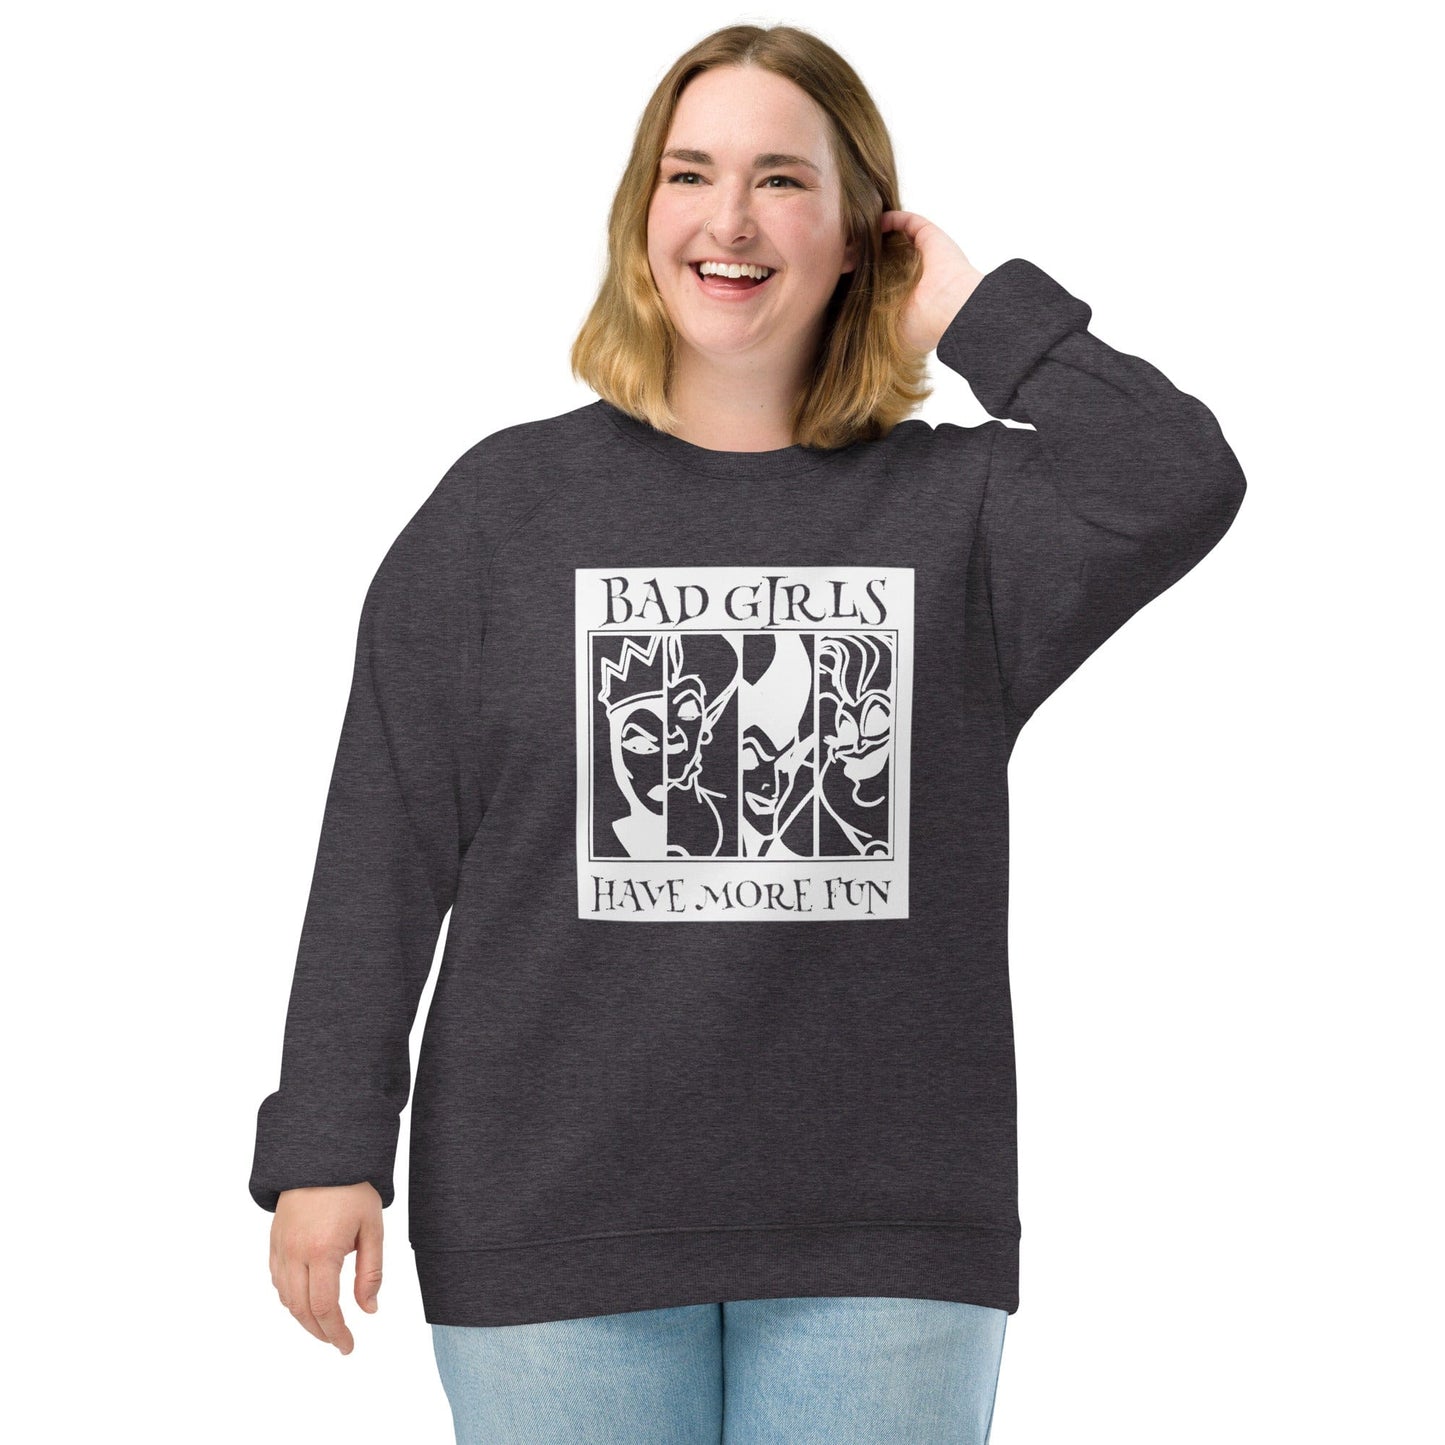 InsensitiviTees Shirts Bad Girls Have More Fun Sweatshirt